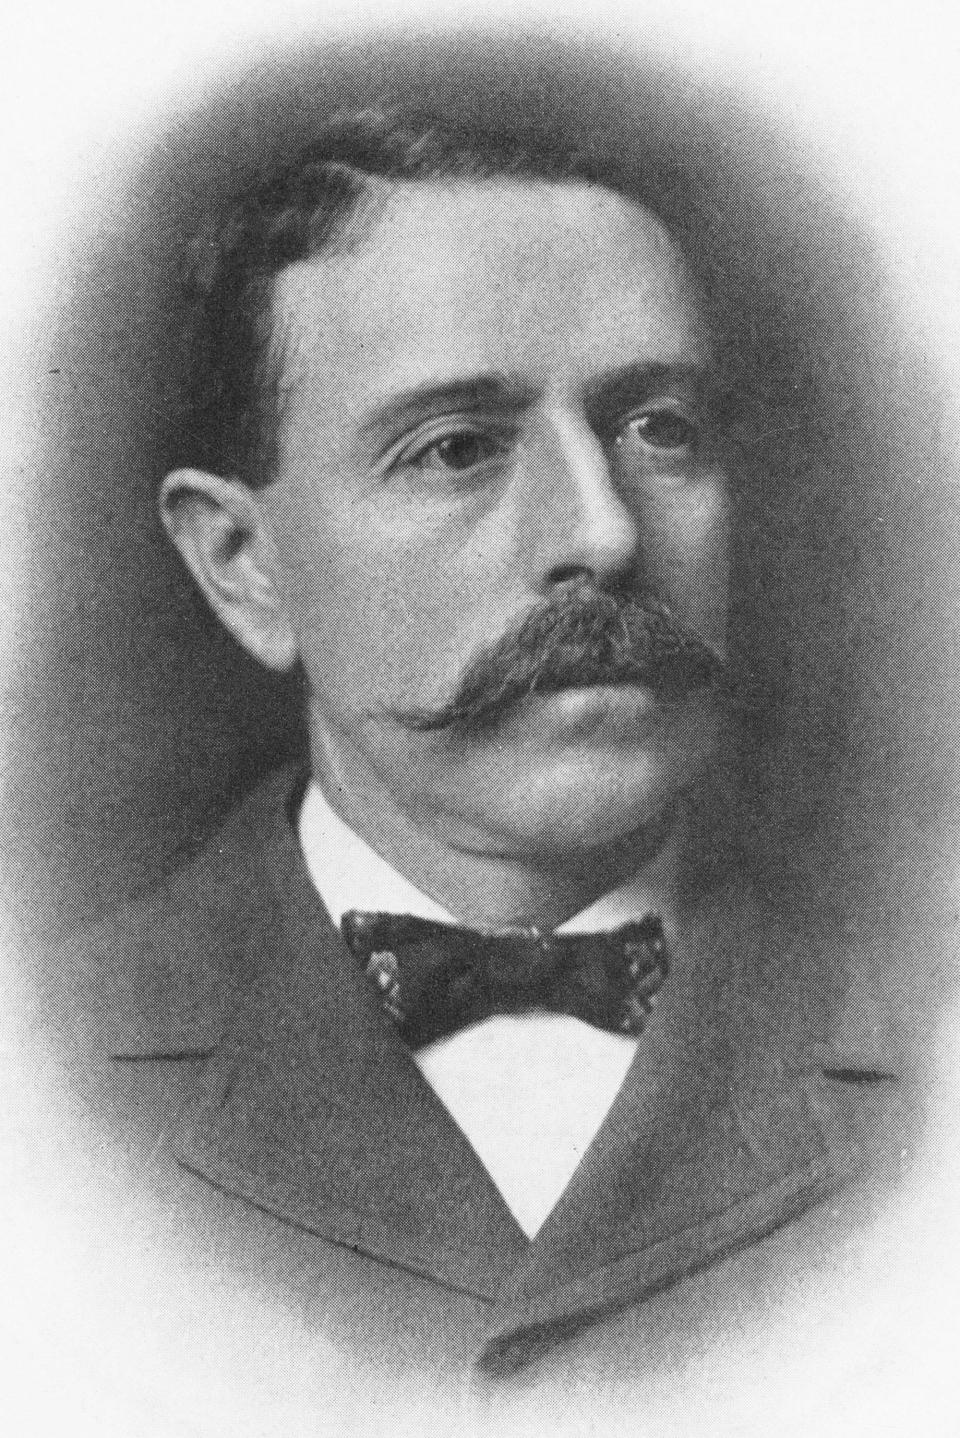 Edward Tuhey, mayor of Muncie in 1900.